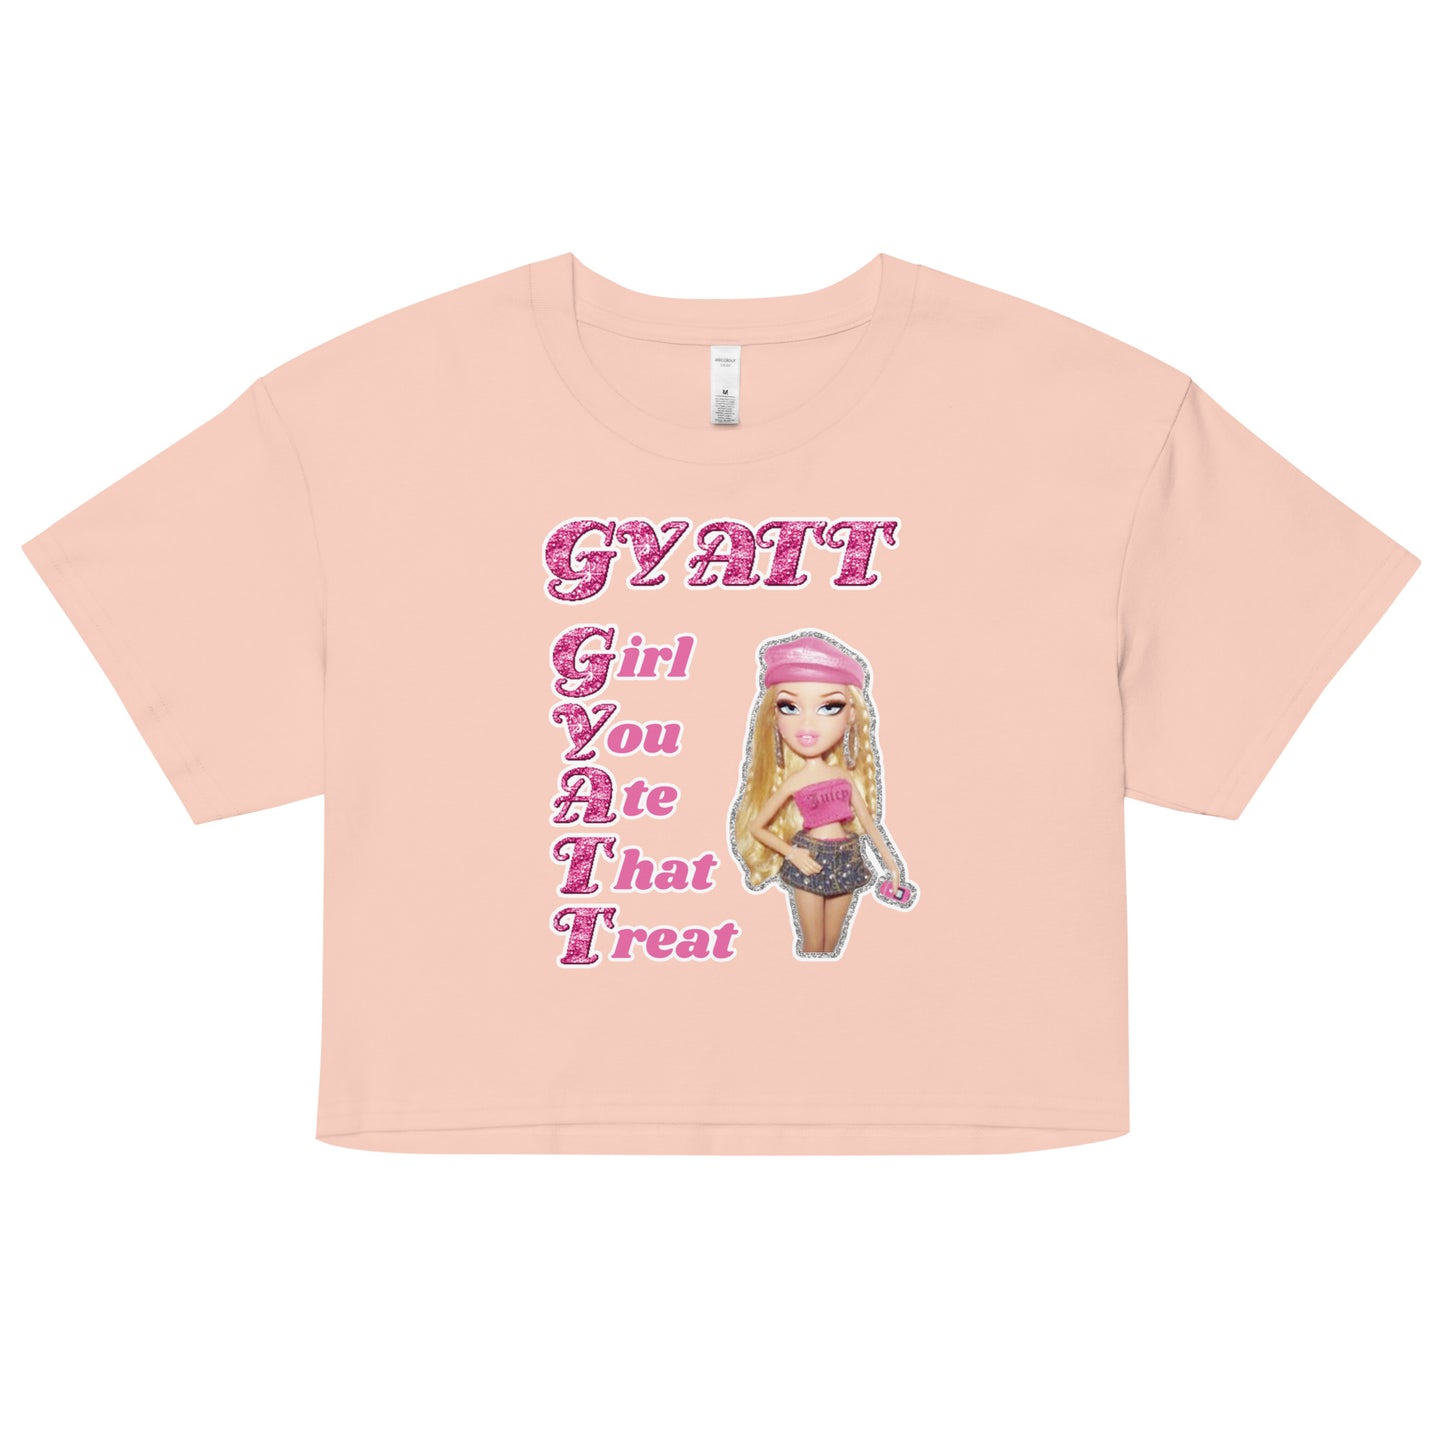 GYATT (Girl You Ate That Treat) crop top